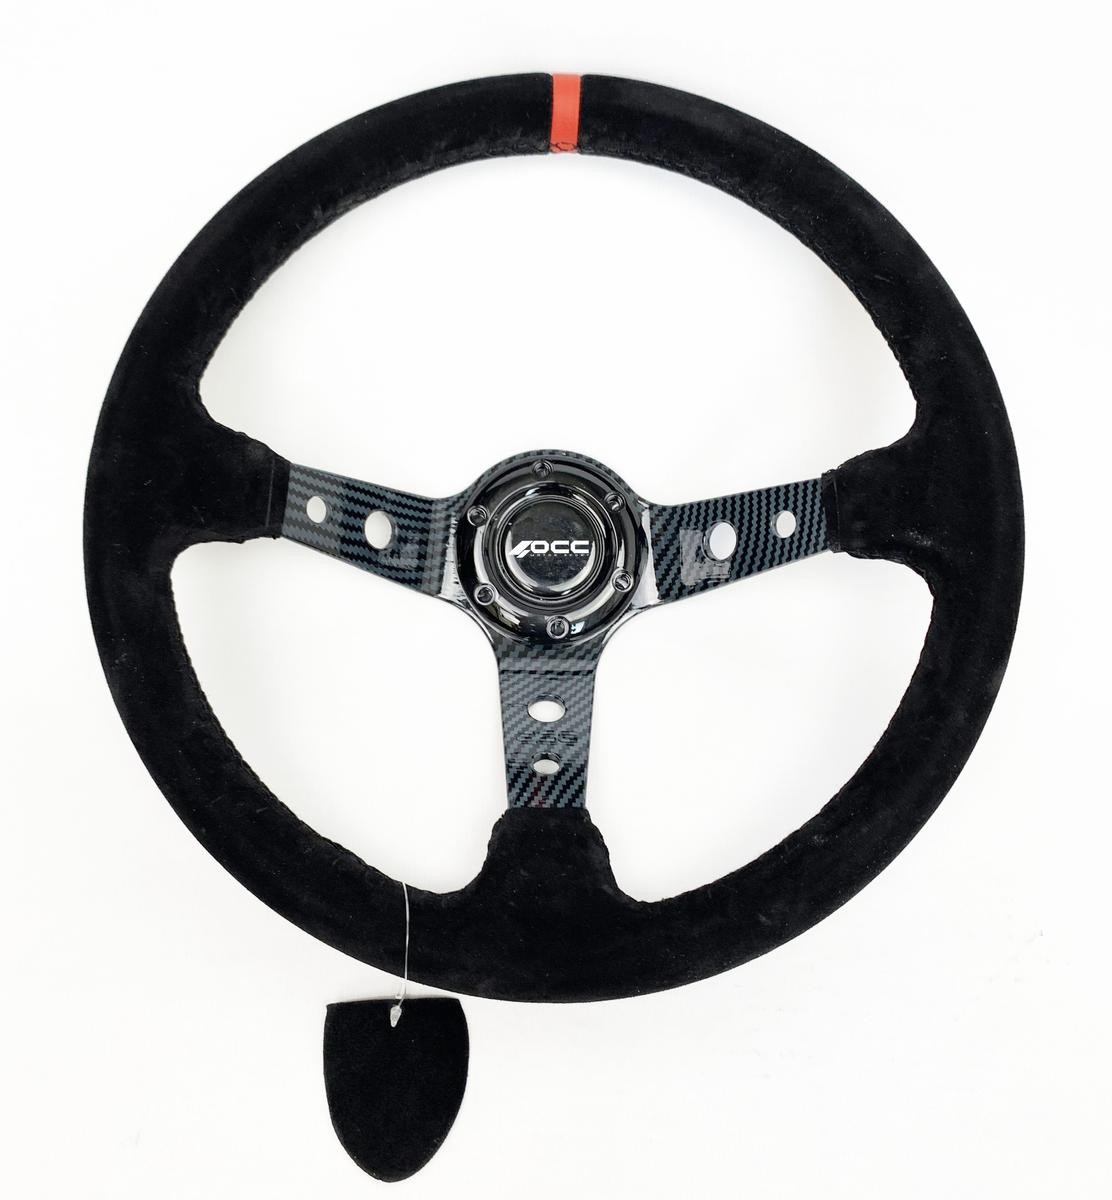 Suzuki Sports steering wheel Occ Motorsport OCCVOL005 at a good price